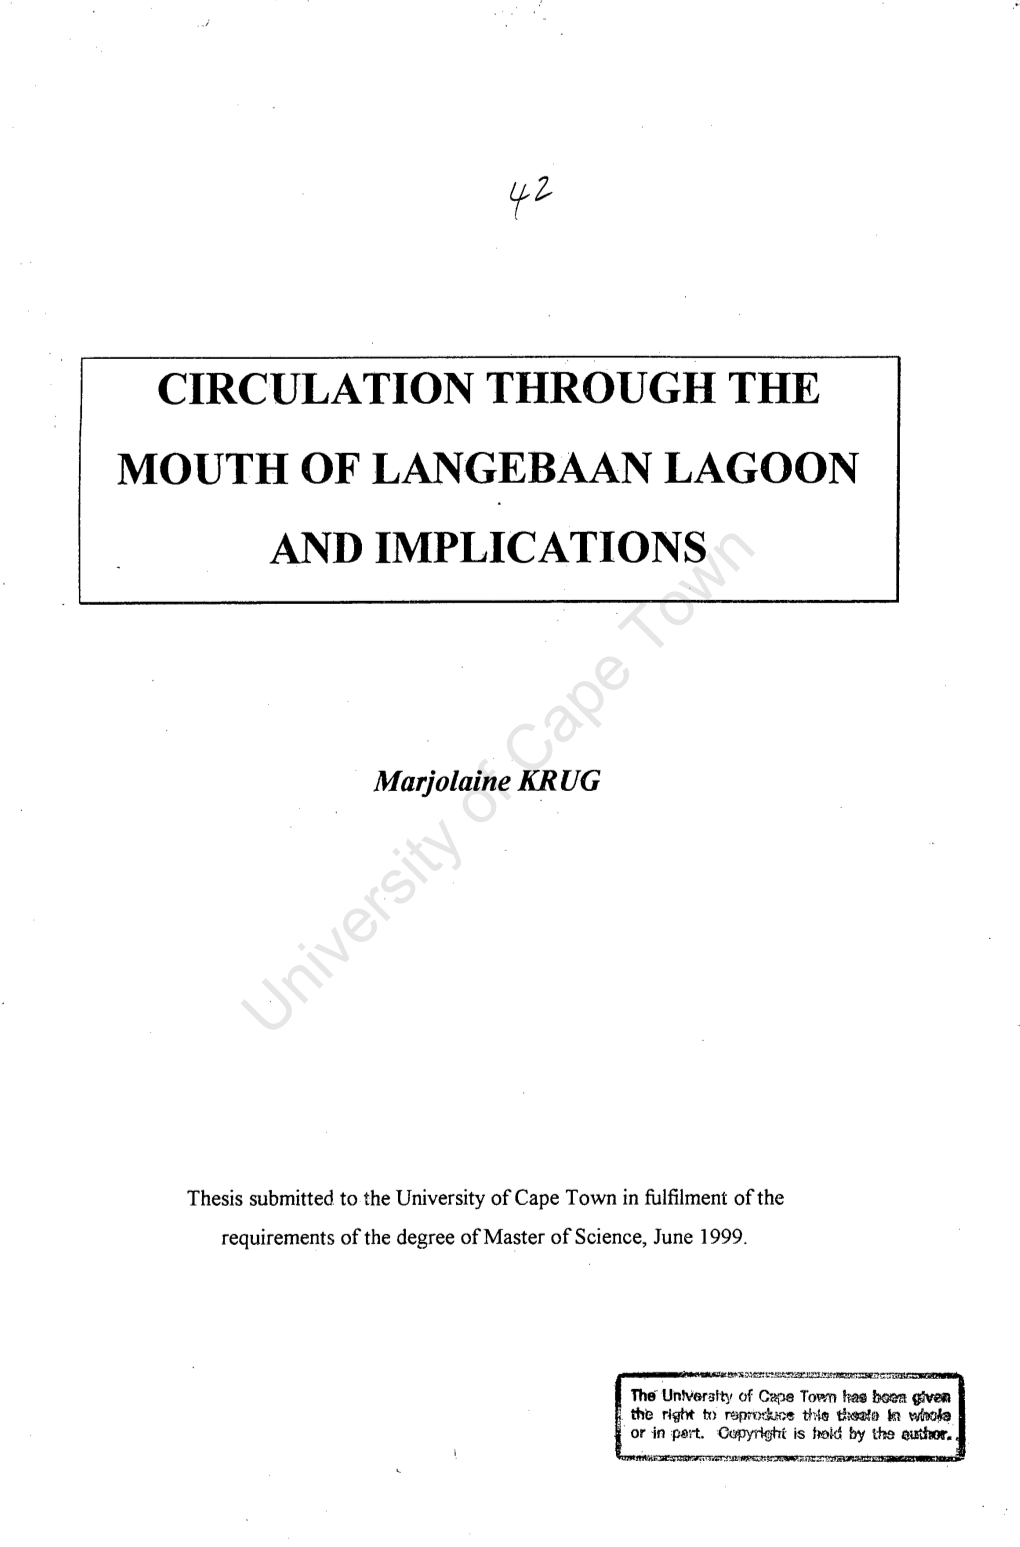 Circulation Through the Mouth of Langebaan Lagoon and Implications